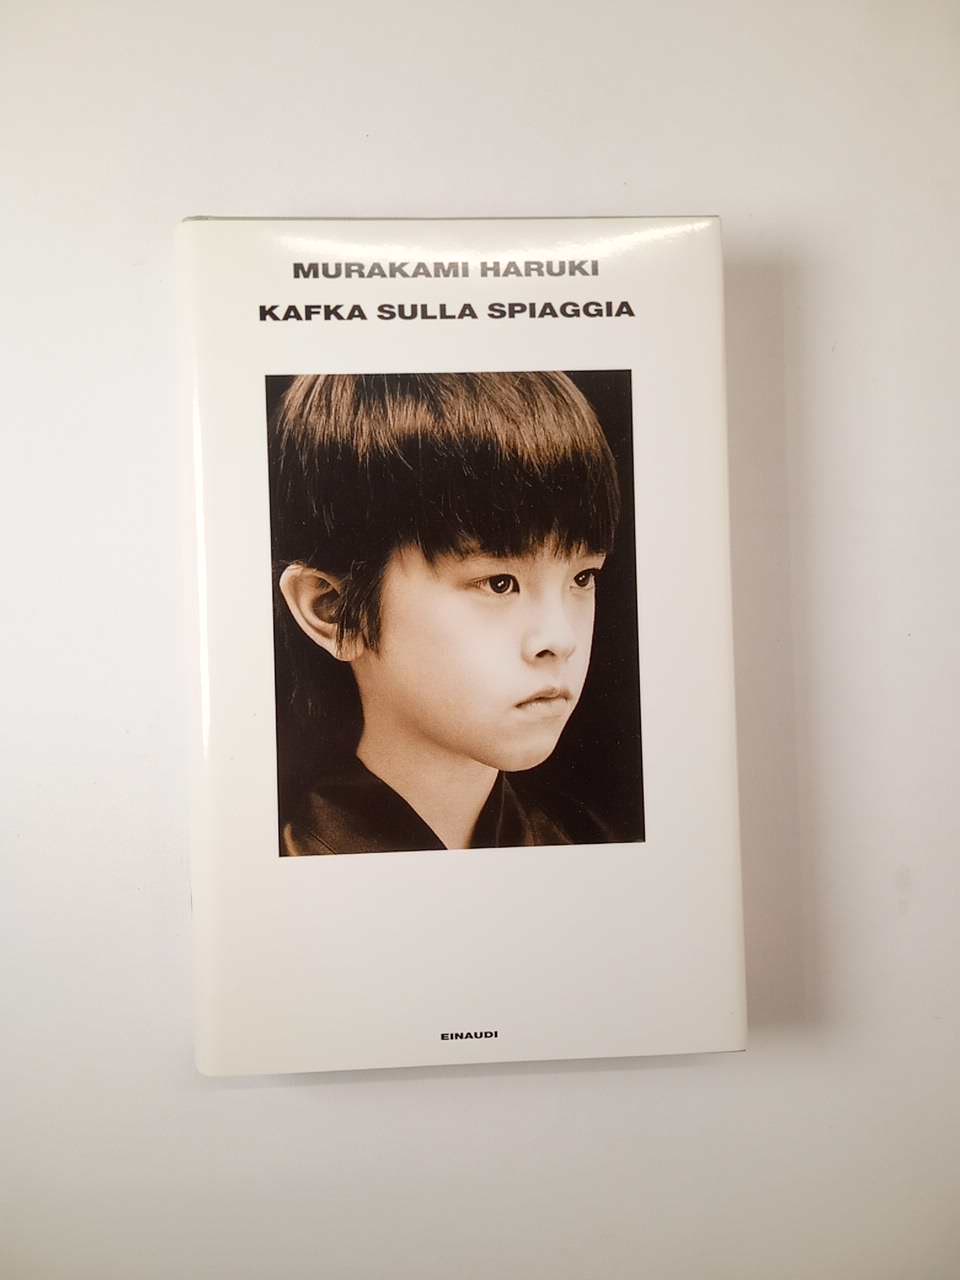 Murakami Haruki - Kafka sulla spiaggia - Einaudi 2008 - Semi d'inchiostro